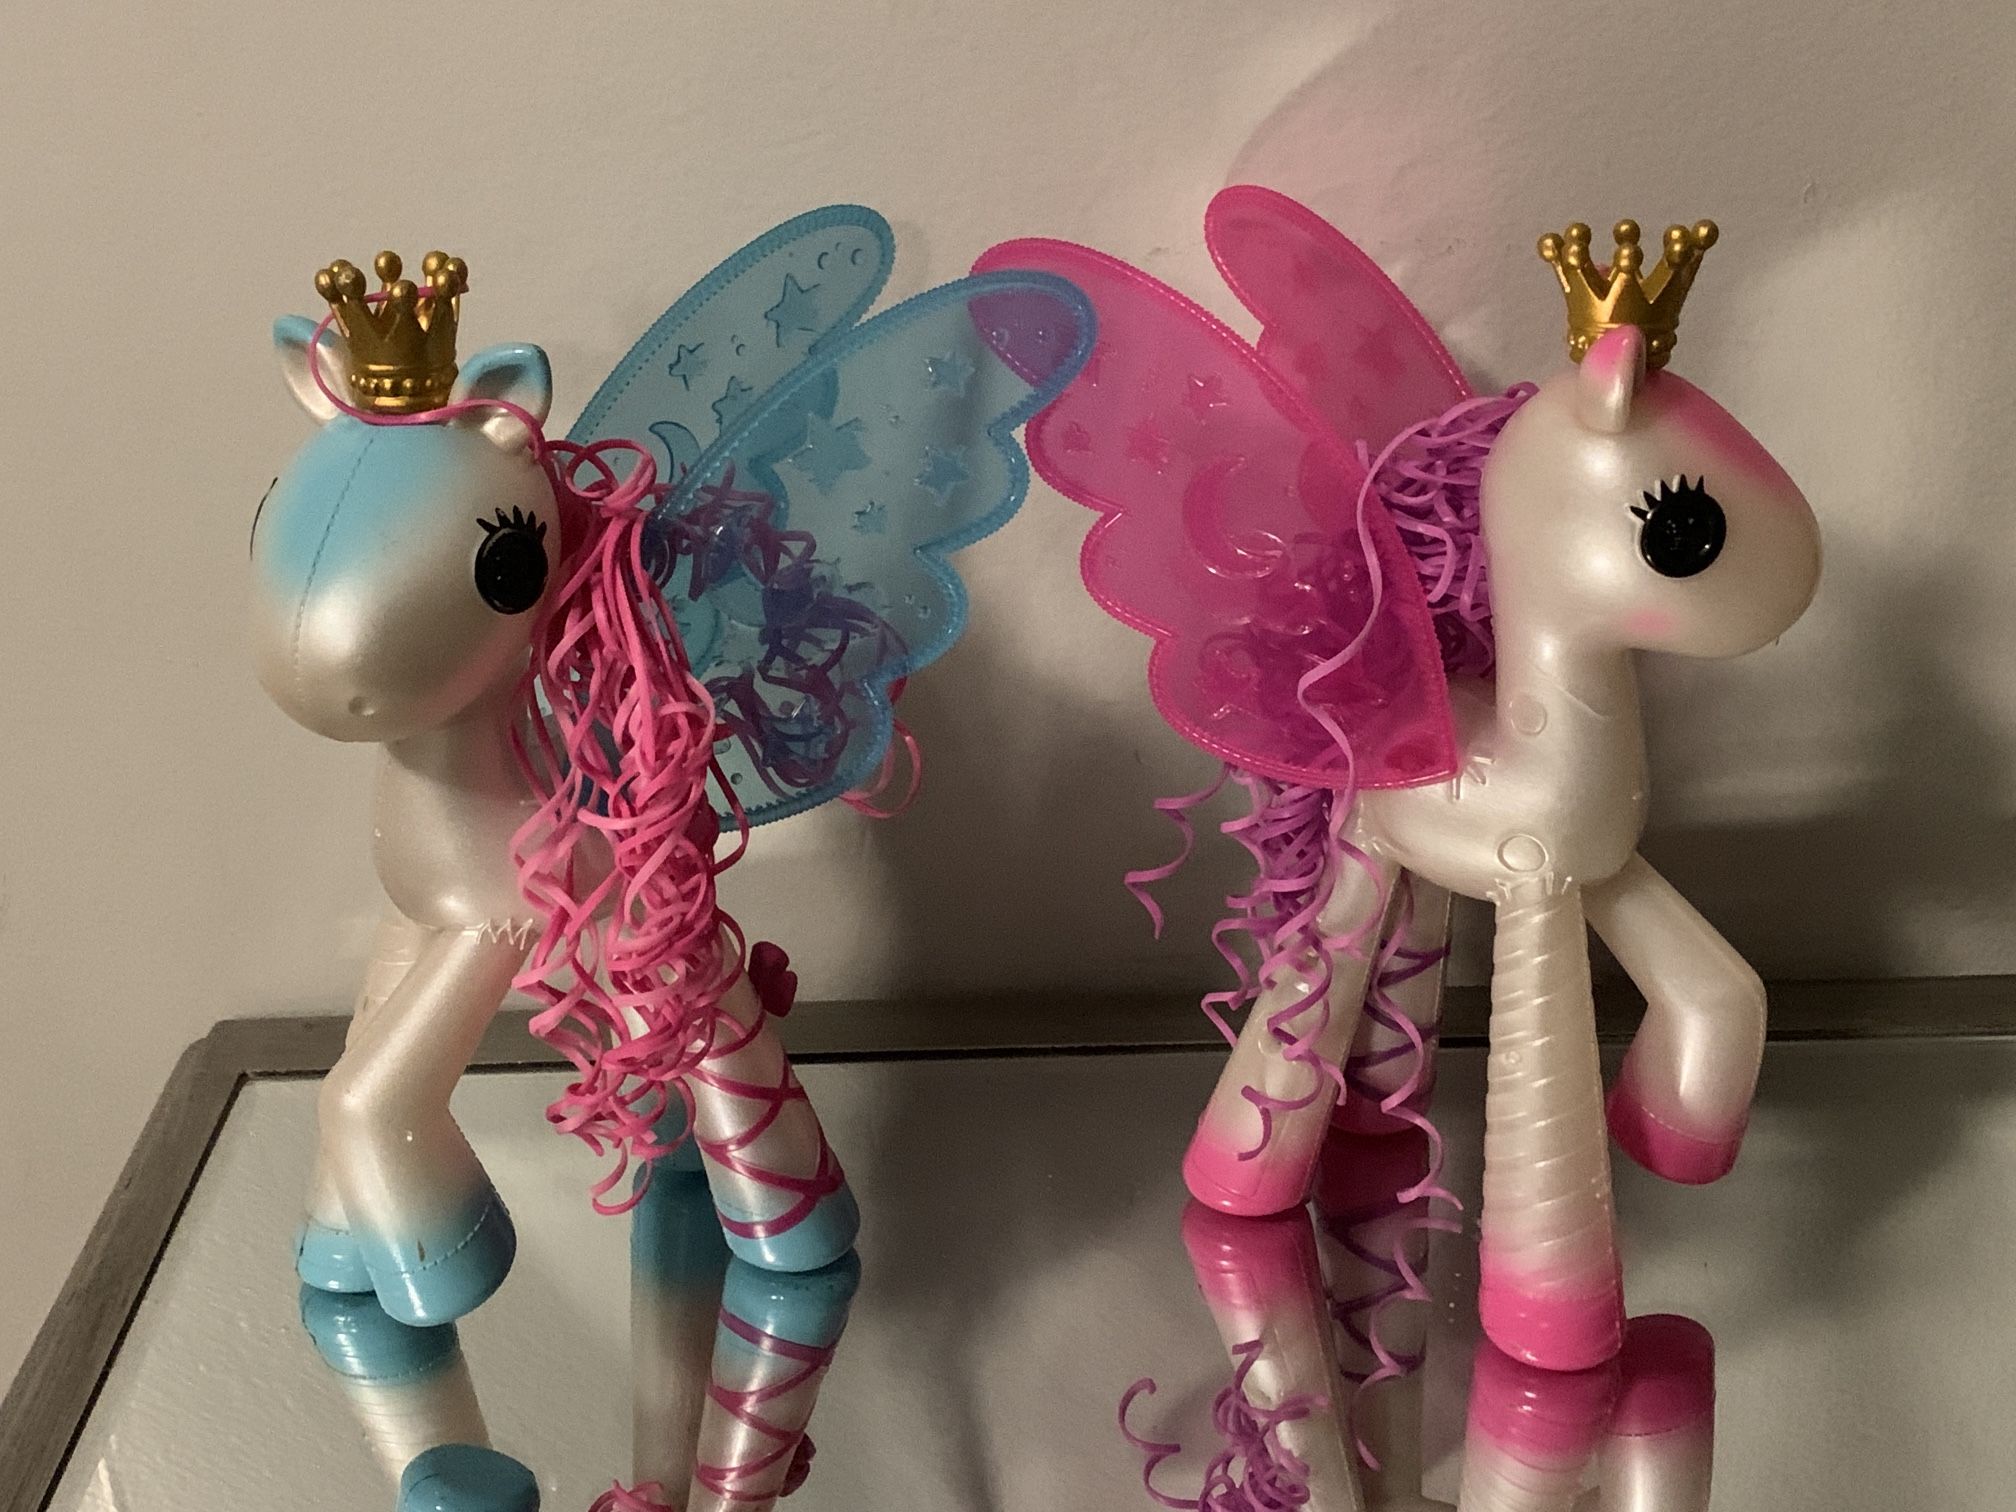 Lalaloopsi Ponies Blue and Pink